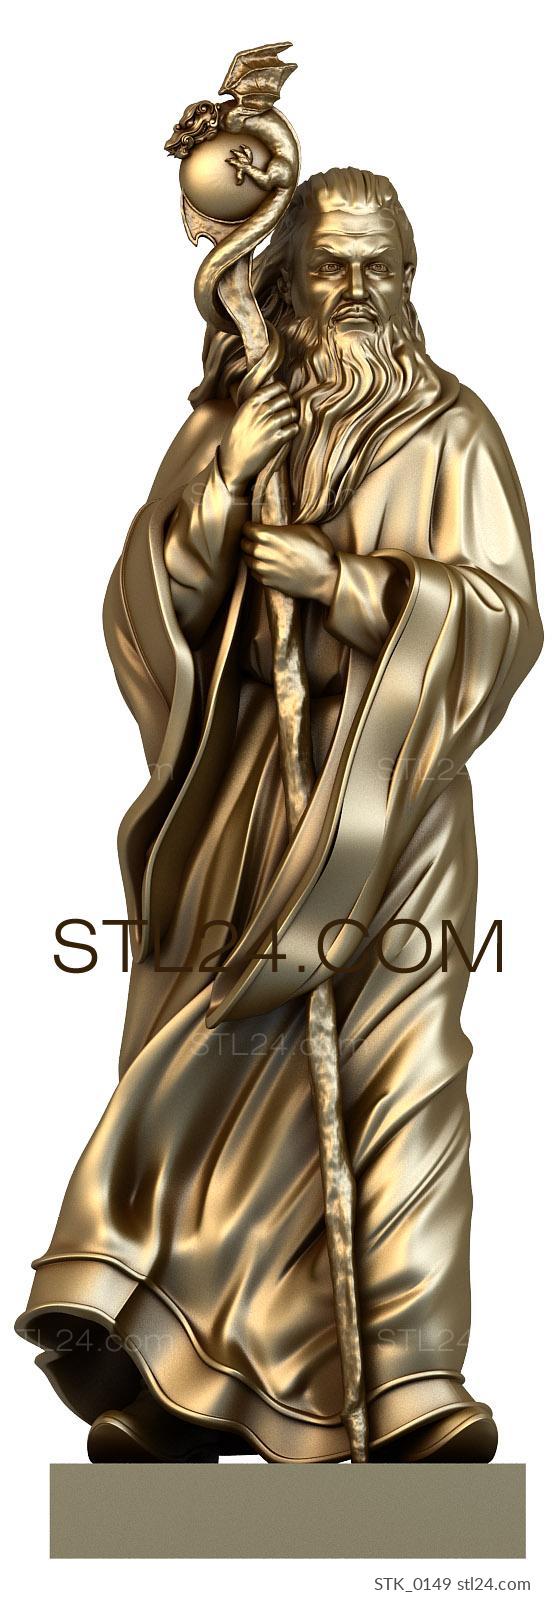 Statuette (STK_0149) 3D models for cnc